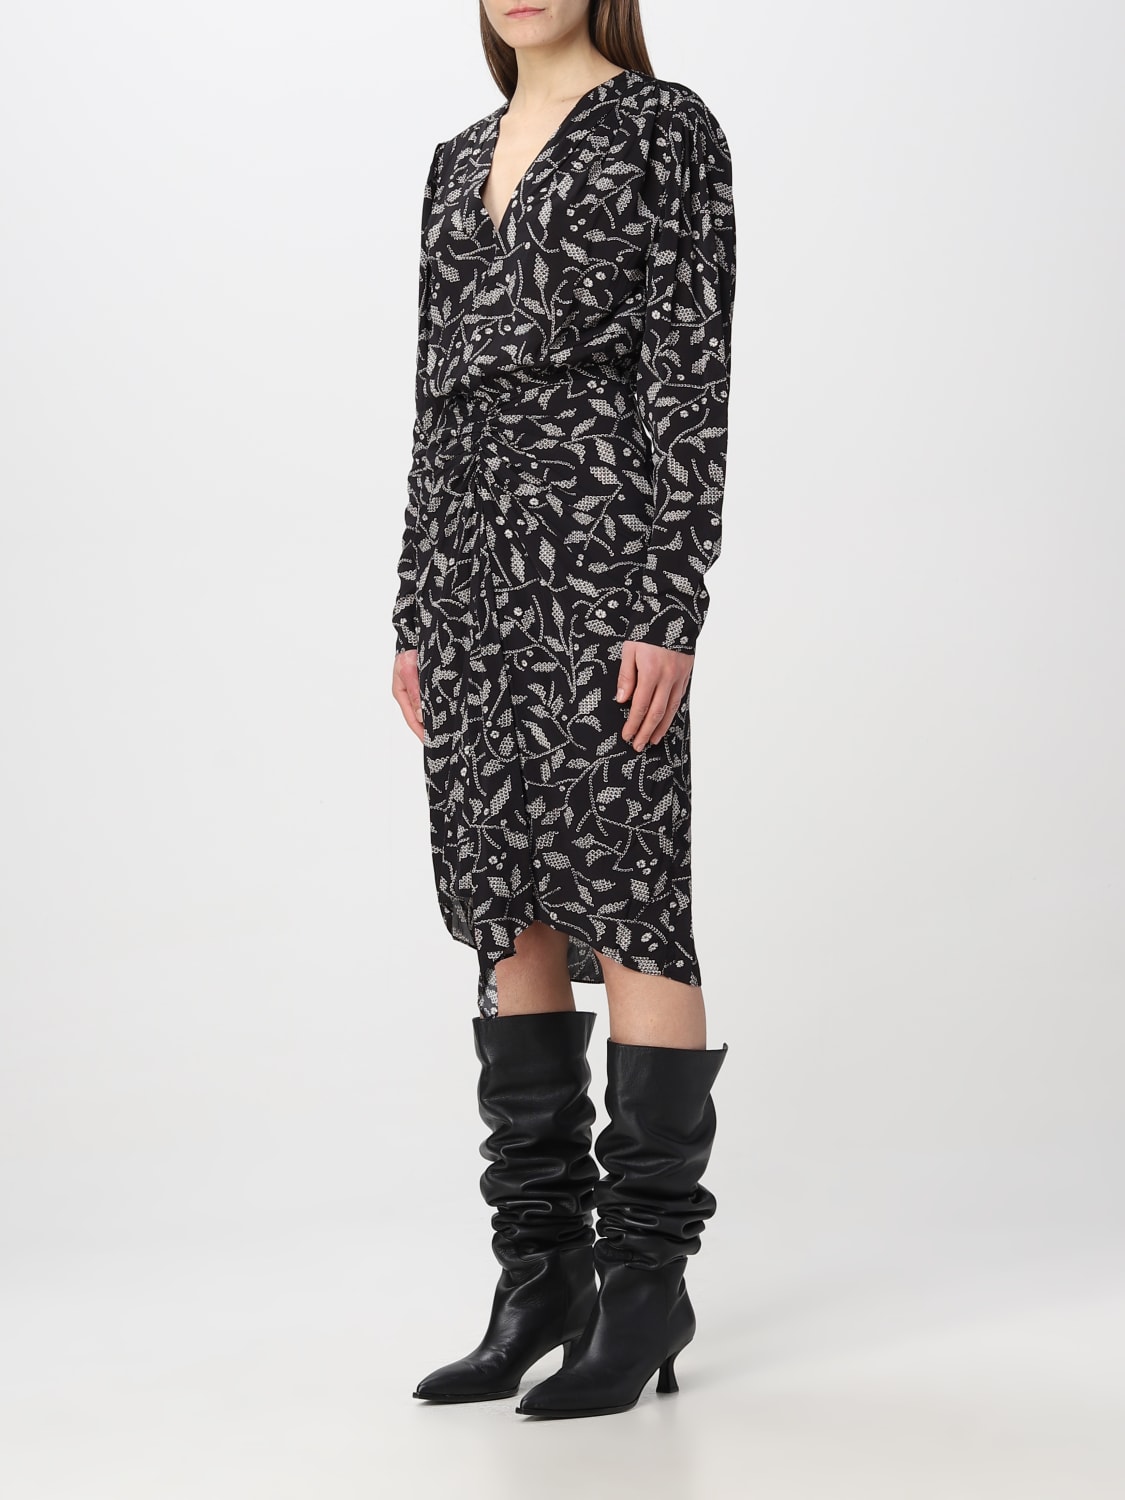 ISABEL MARANT ETOILE: dress for woman - Black | Marant dress online at GIGLIO.COM